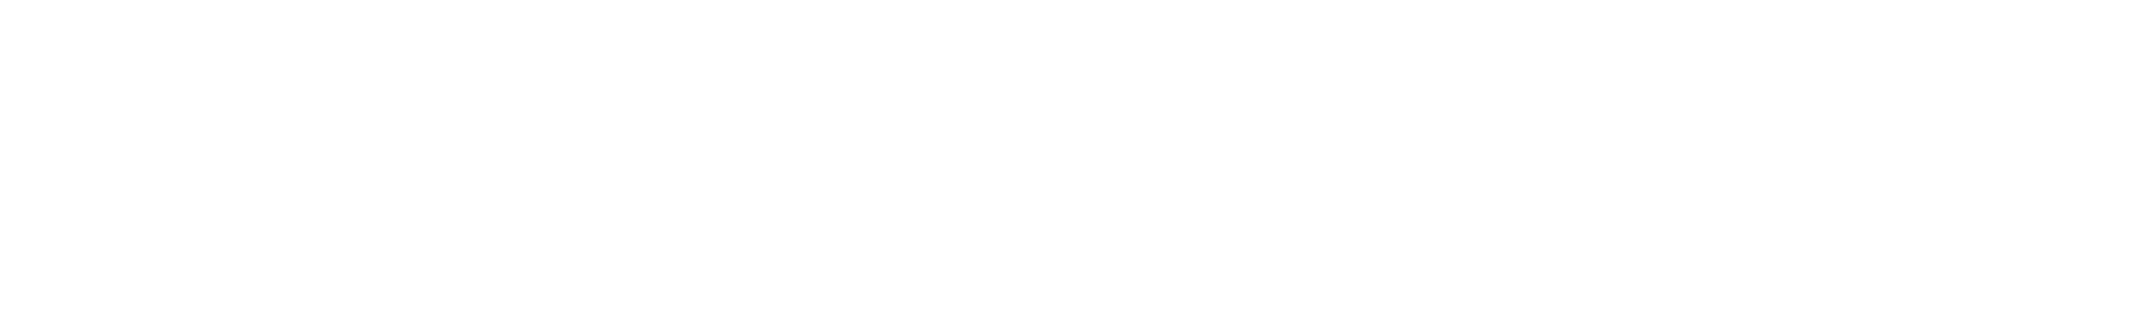 Hasnain Online Quran Academy